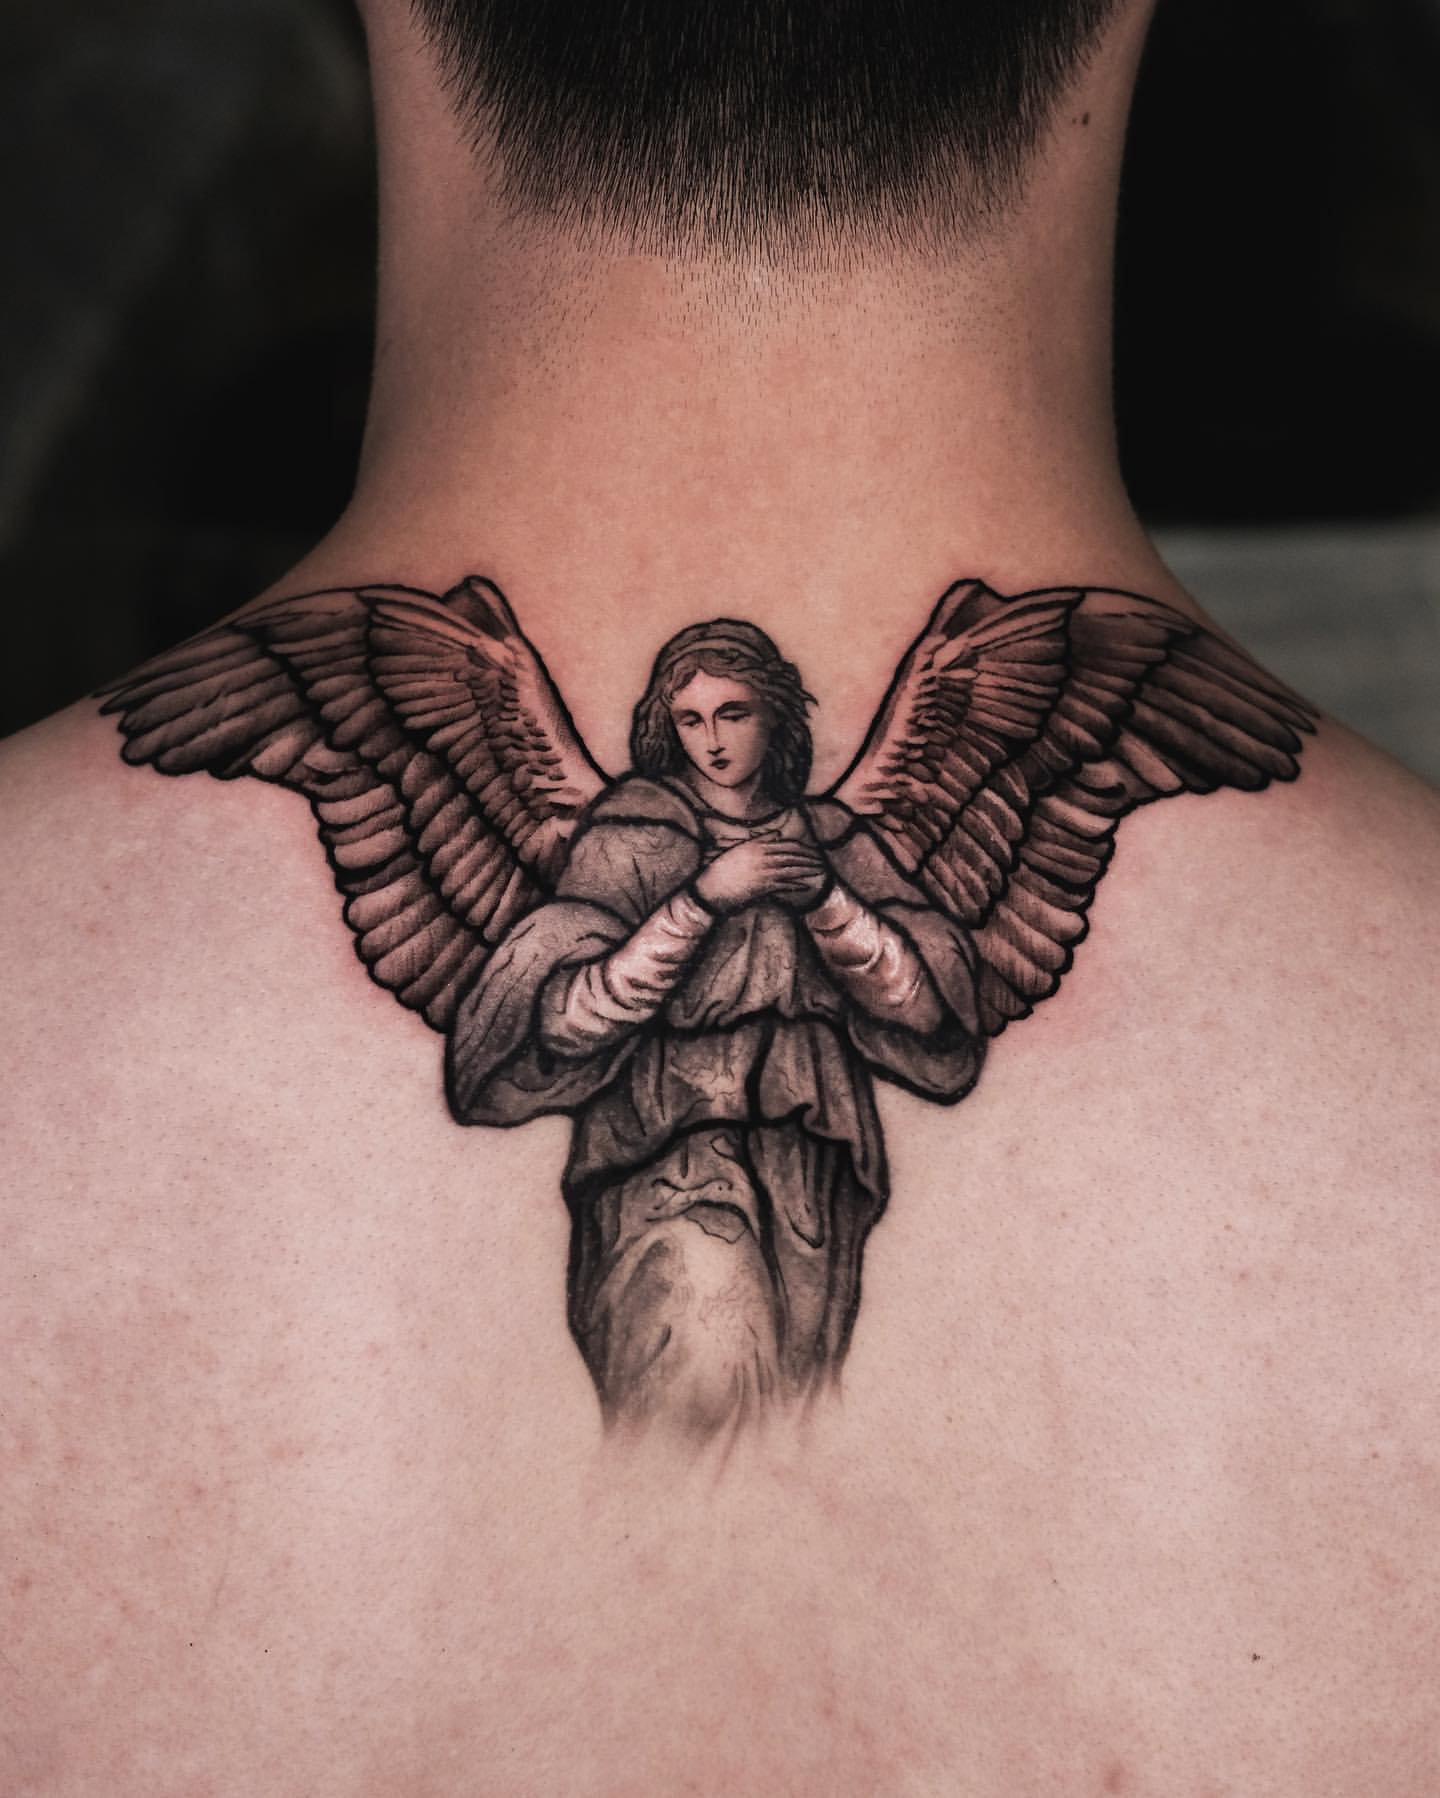 Waterproof Temporary Tattoo Angel Wings Cross Realistic Back Chest Neck  Stickers | eBay